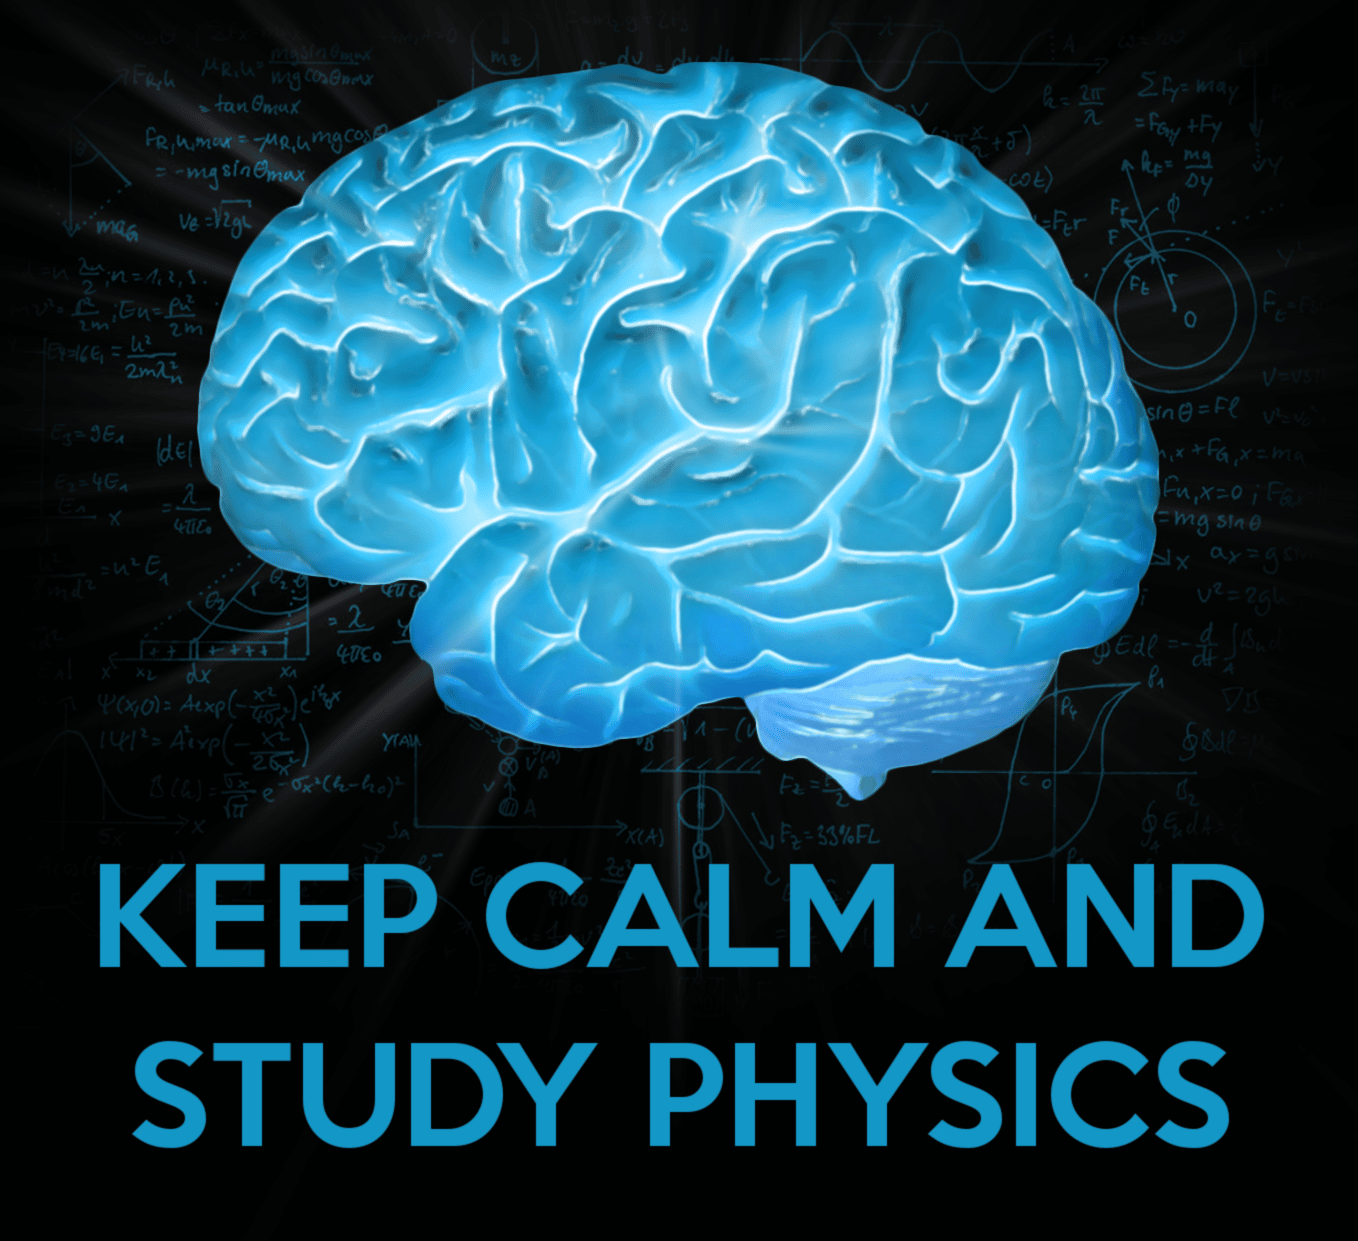 Keep calm and study physics by HaniSantosa on DeviantArt